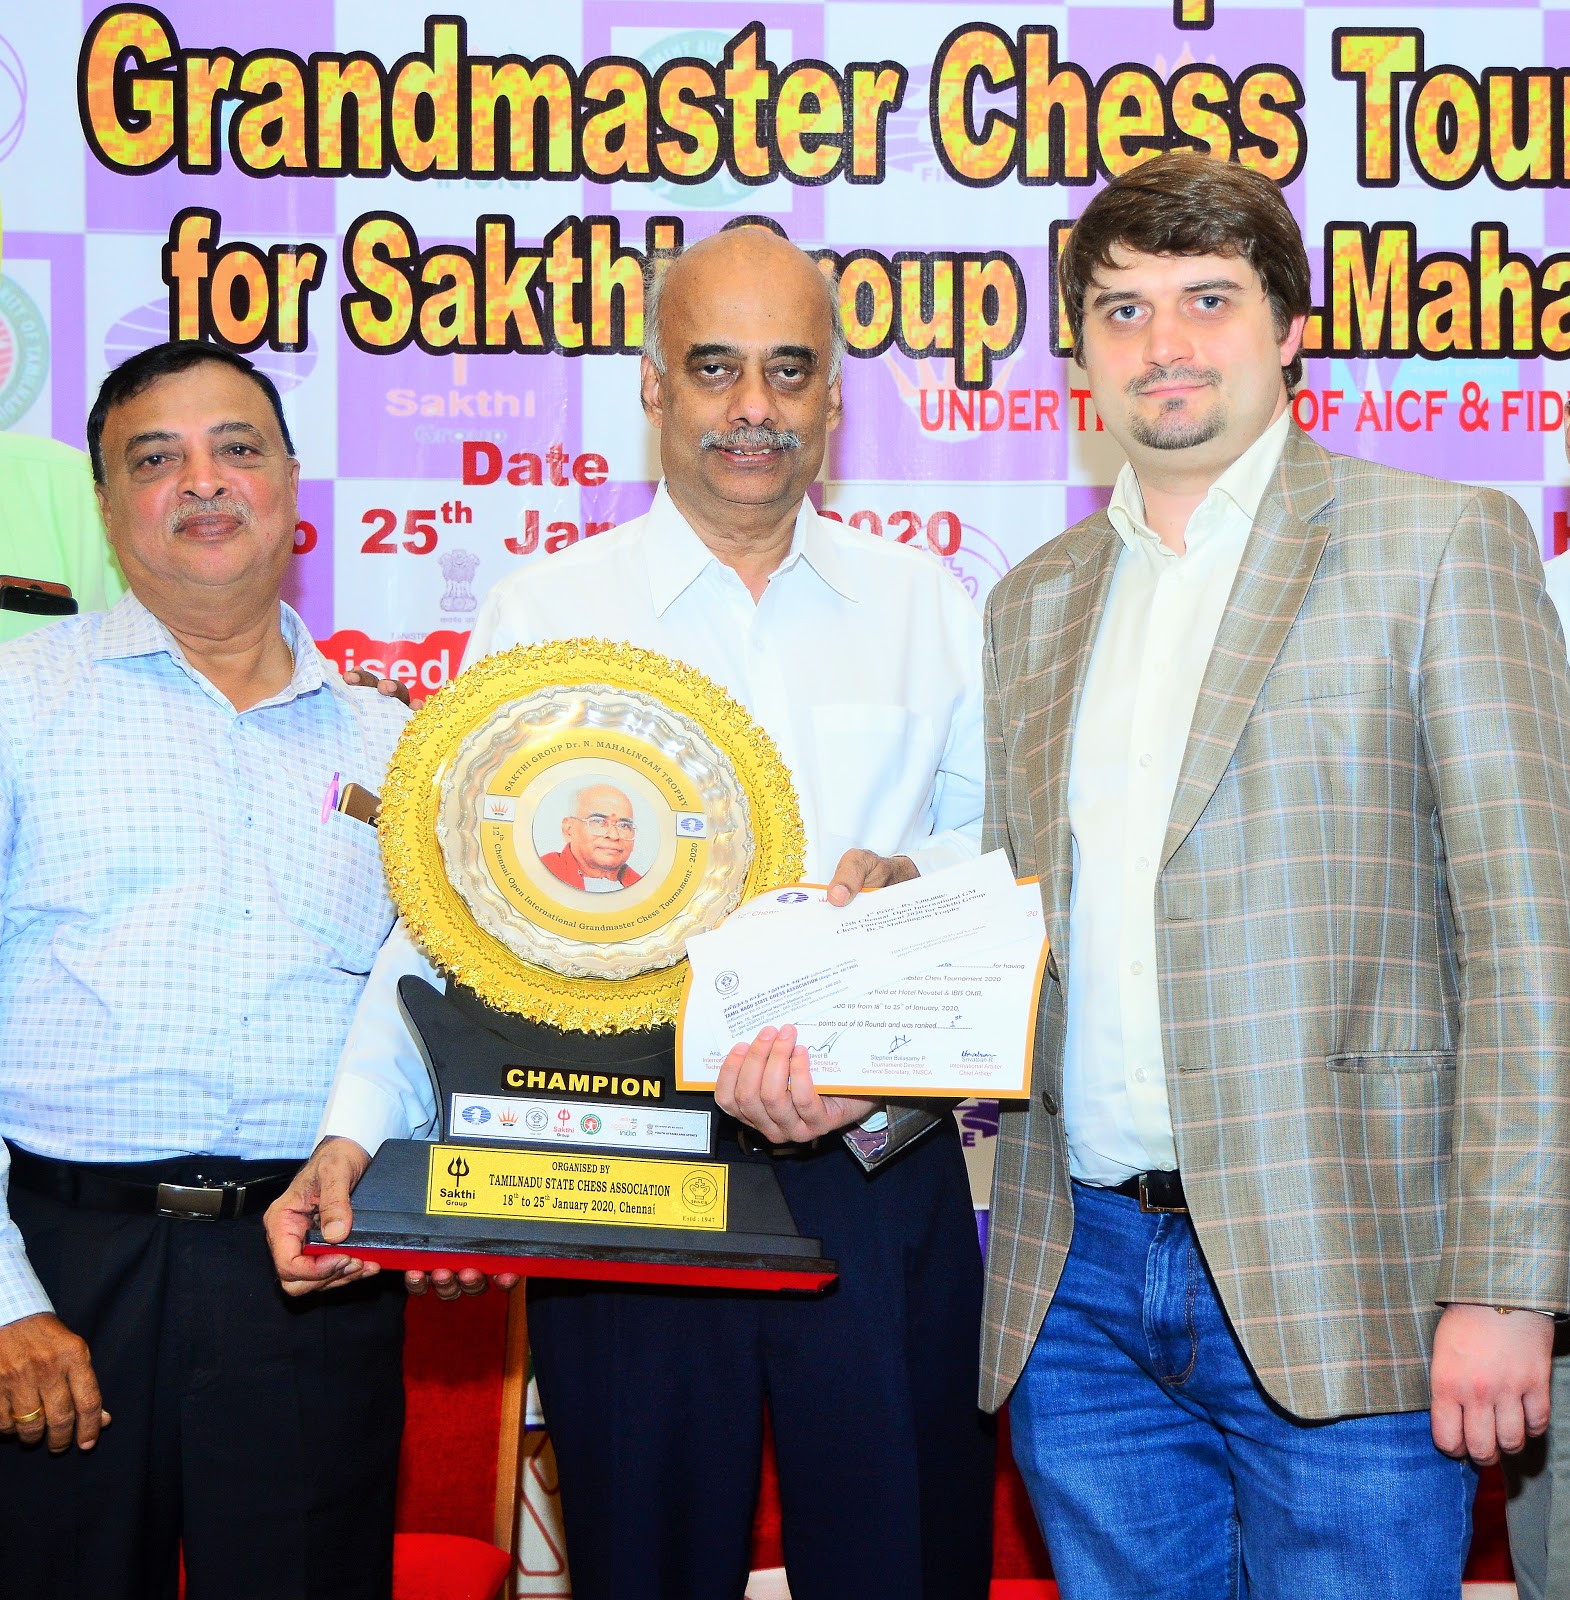 GM Pranav V from Chennai again wins international tournament while